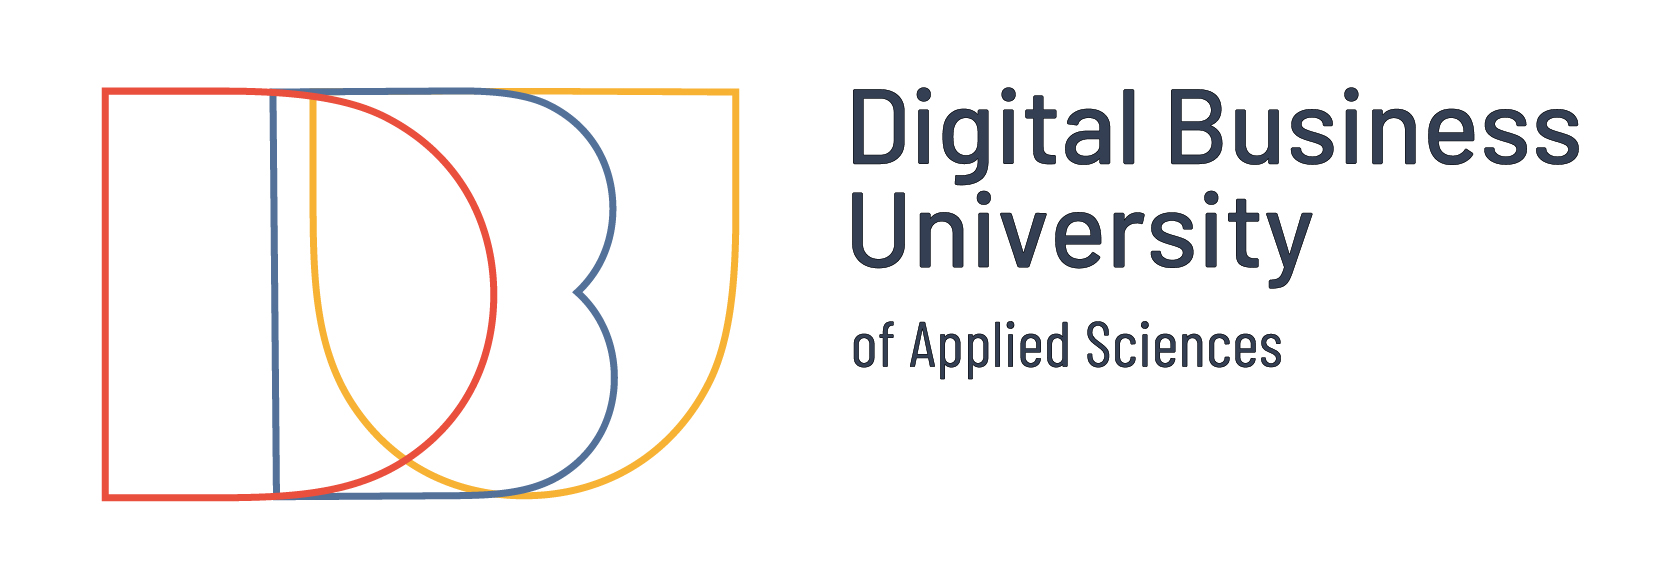 Digital Business University of Applied Sciences Logo